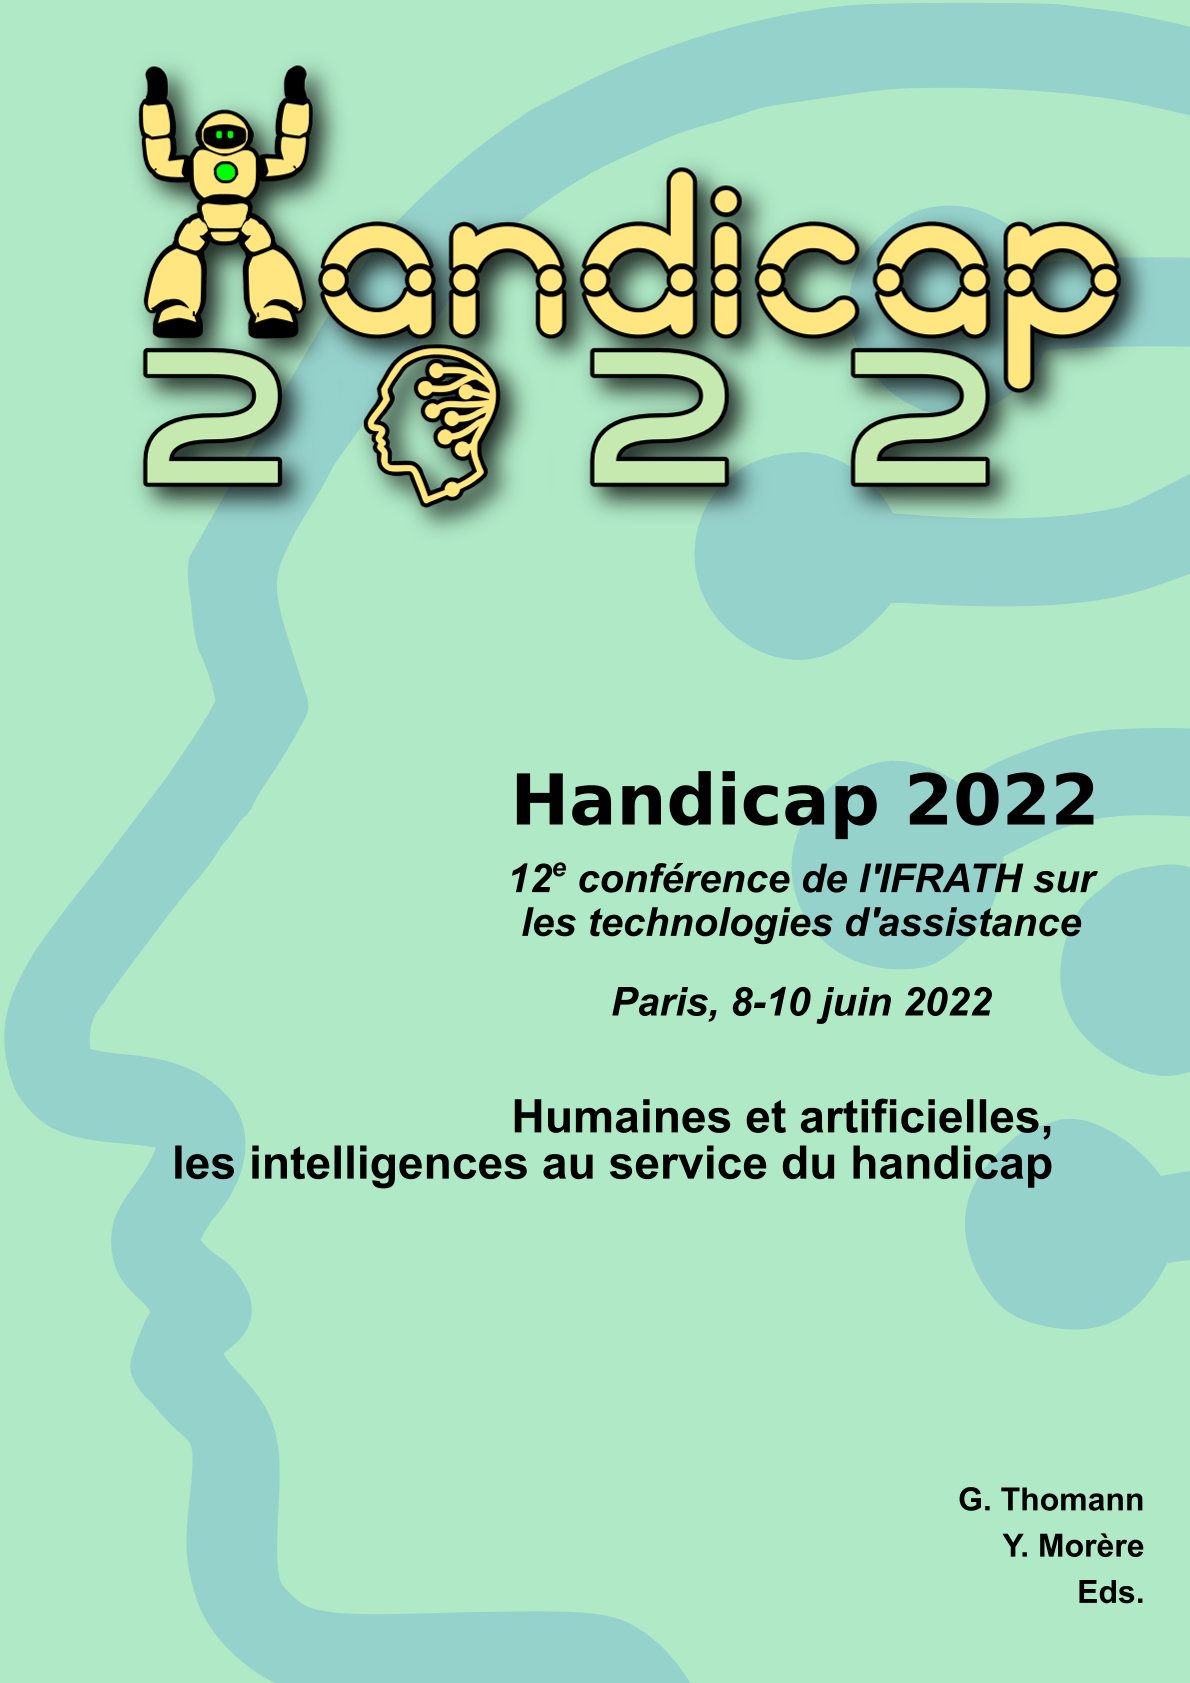 proceedings_handicap2022_usb.jpg